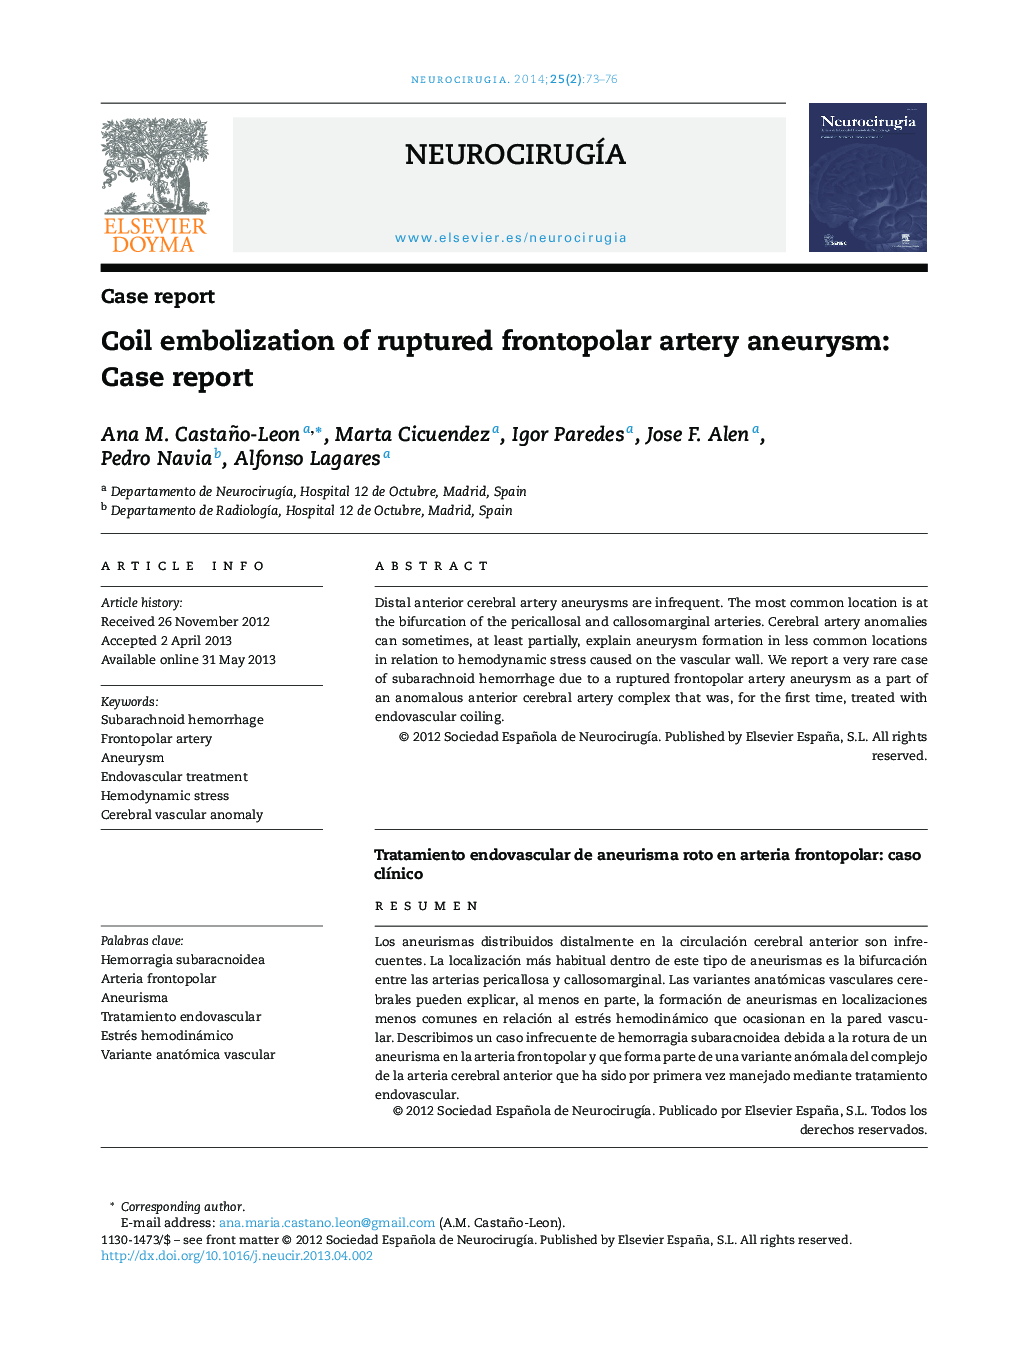 Coil embolization of ruptured frontopolar artery aneurysm: Case report